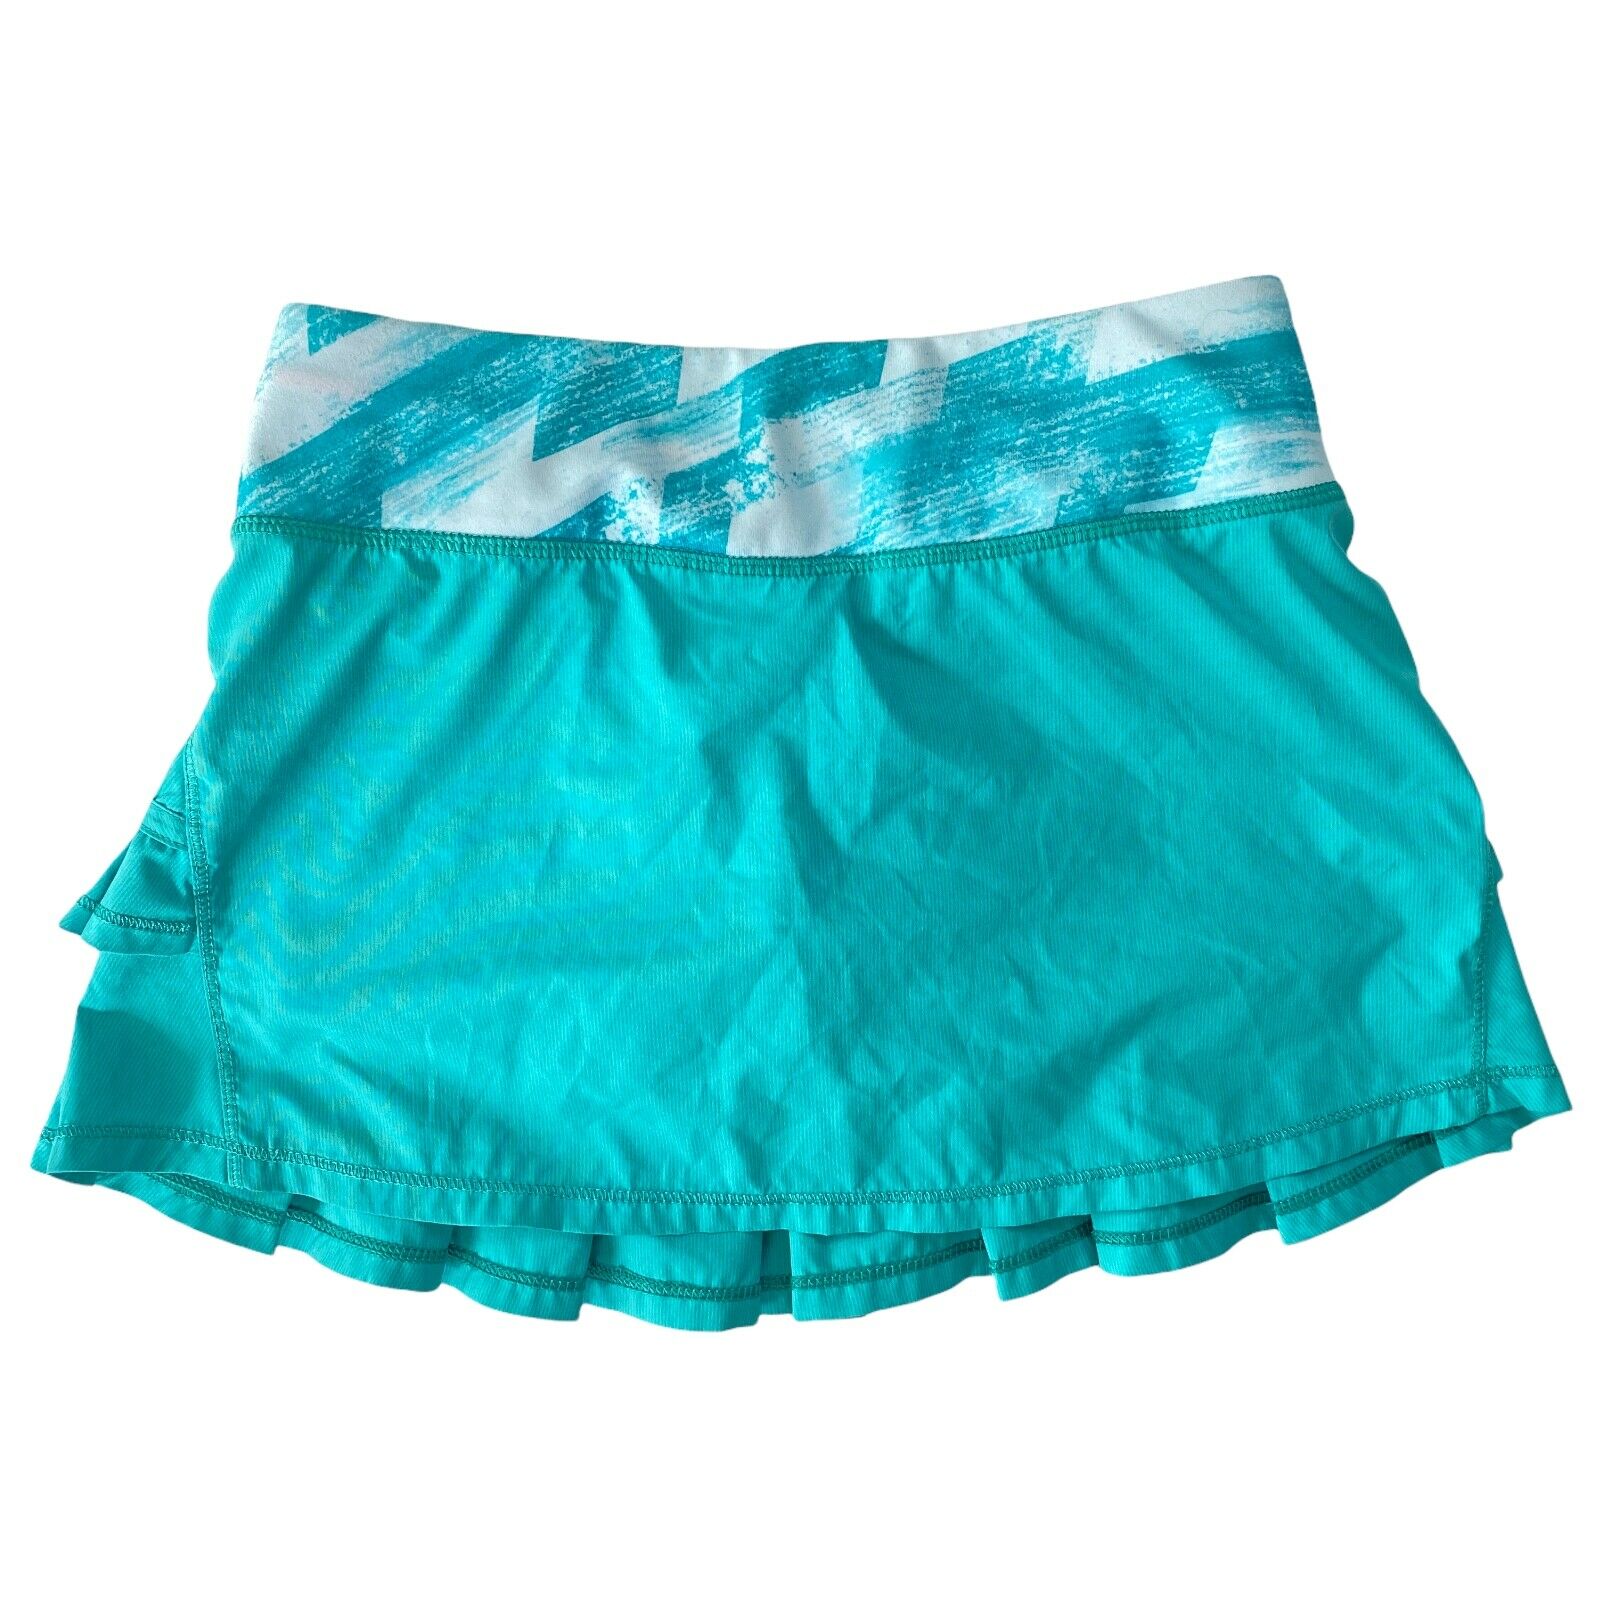 Ivivva By Lululemon Set The Pace Pleated Skirt Green Blue Girls Skort Size 10